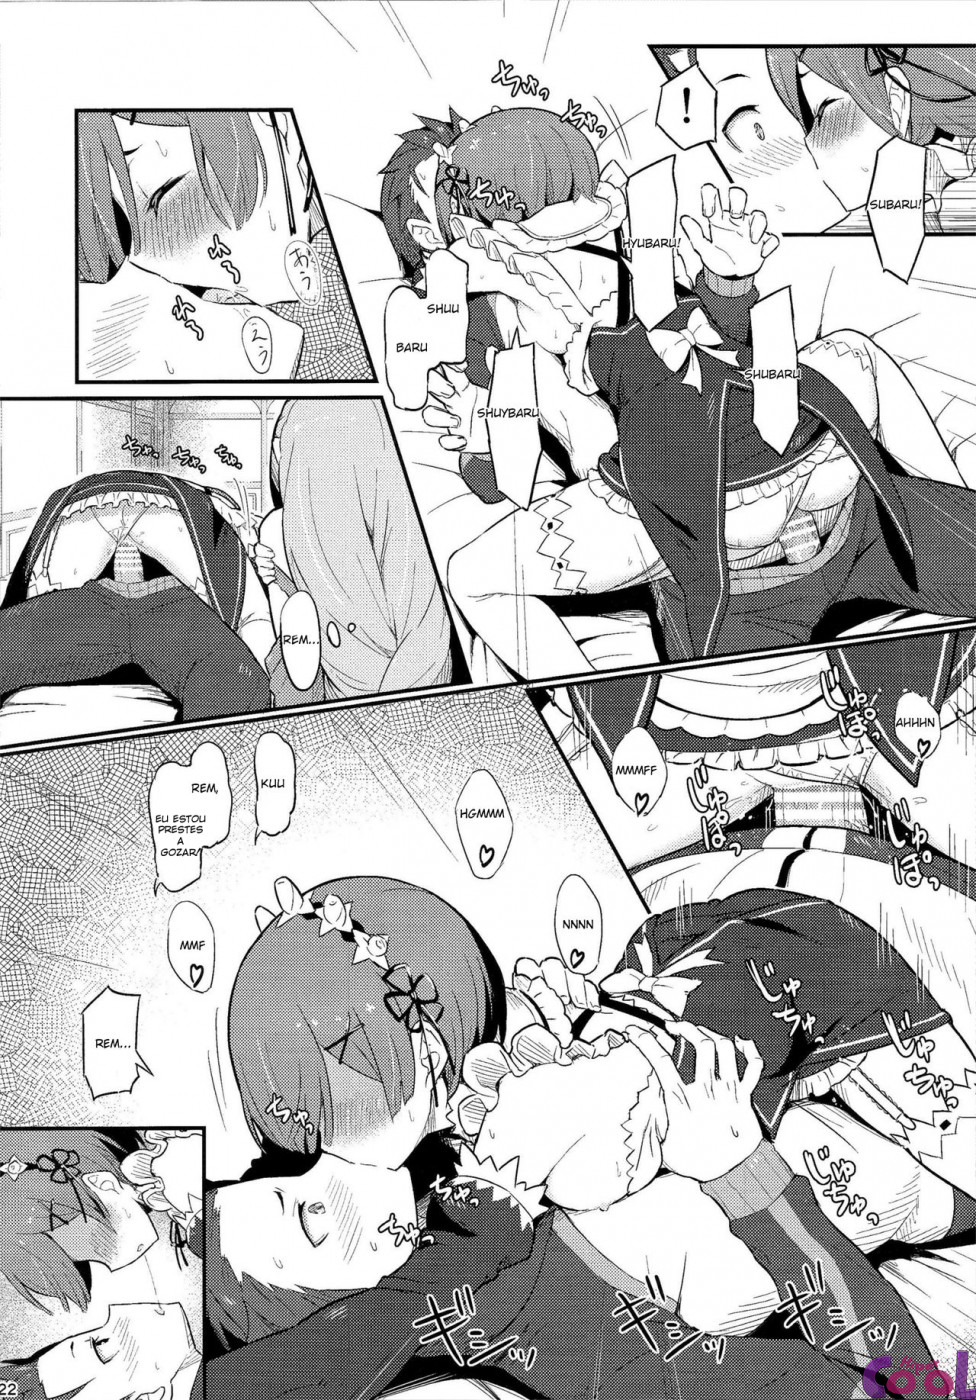 rem-no-emilia-kuttsuke-daisakusen-chapter-01-page-23.jpg